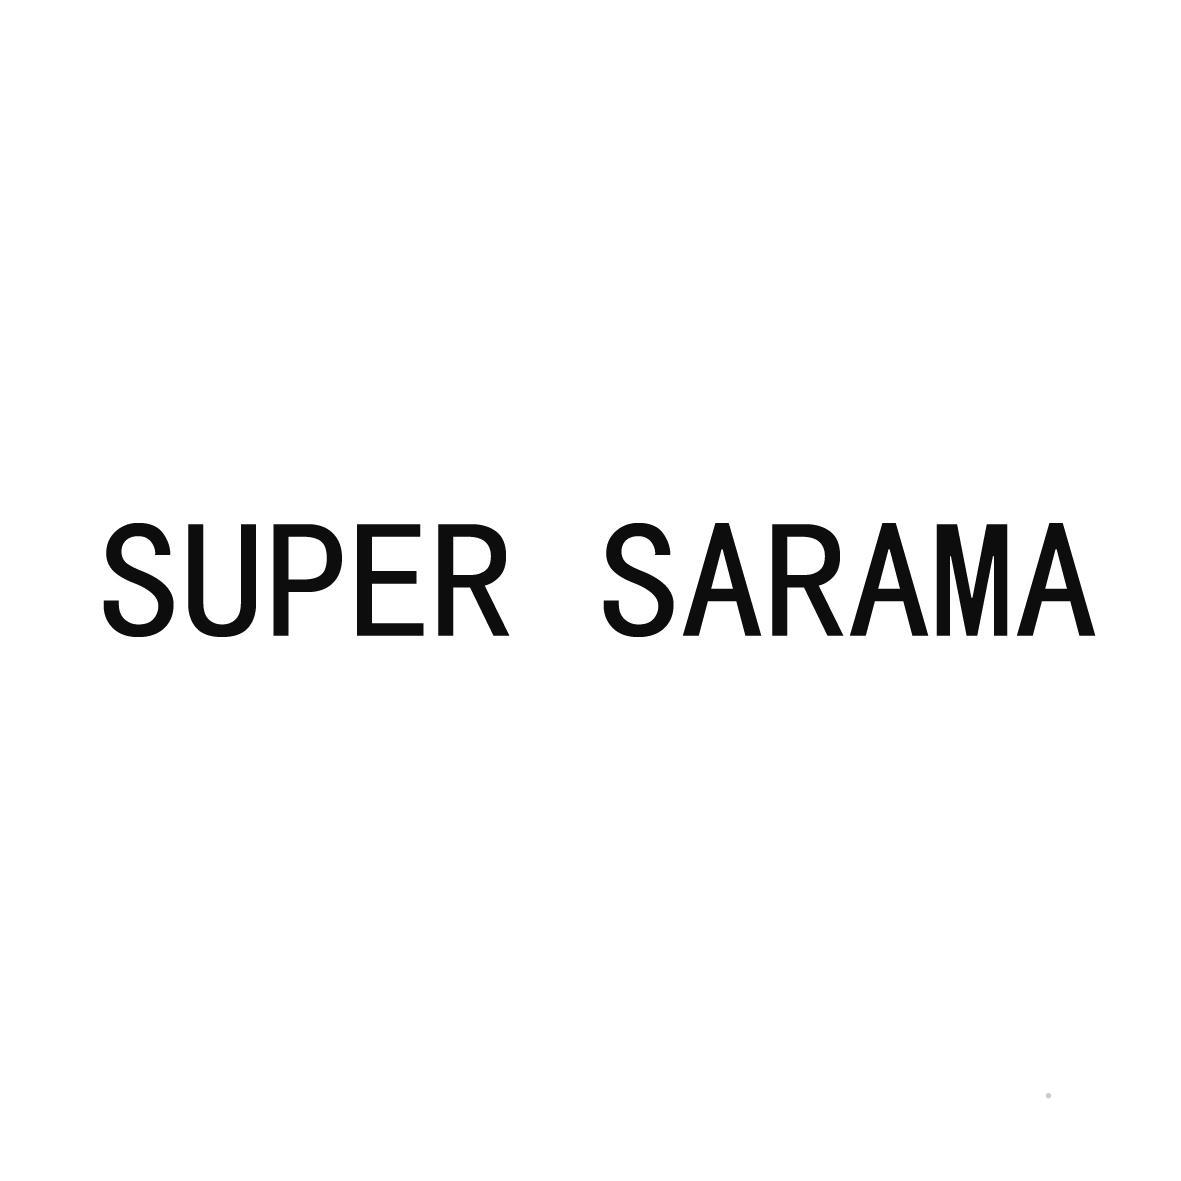 SUPER SARAMA